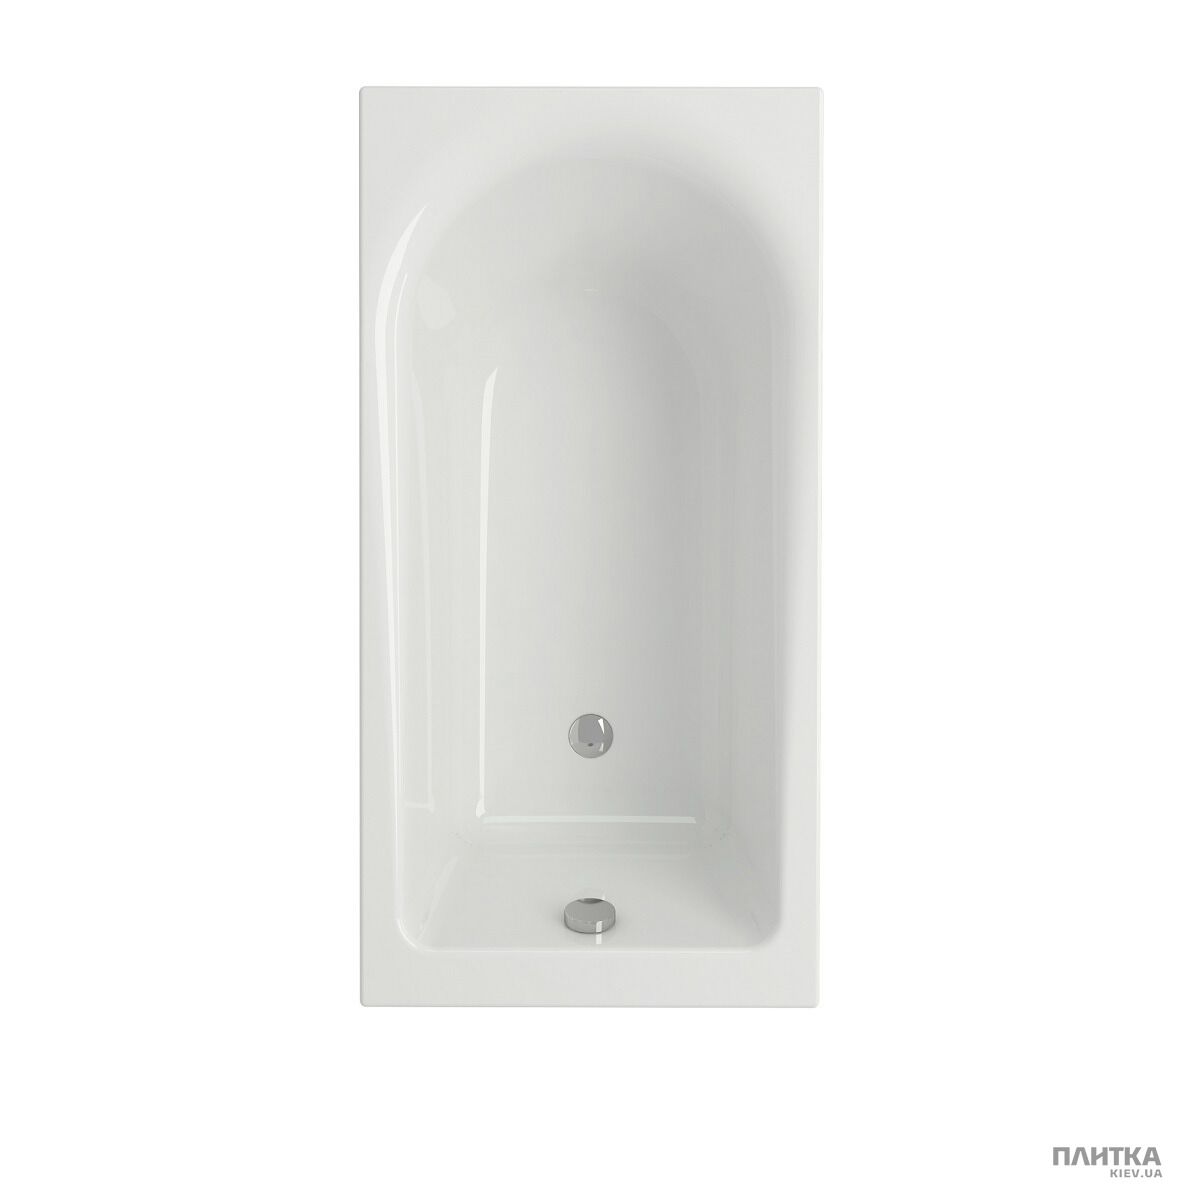 Акриловая ванна Cersanit Flavia Ванна 150x70 COVER+ белый